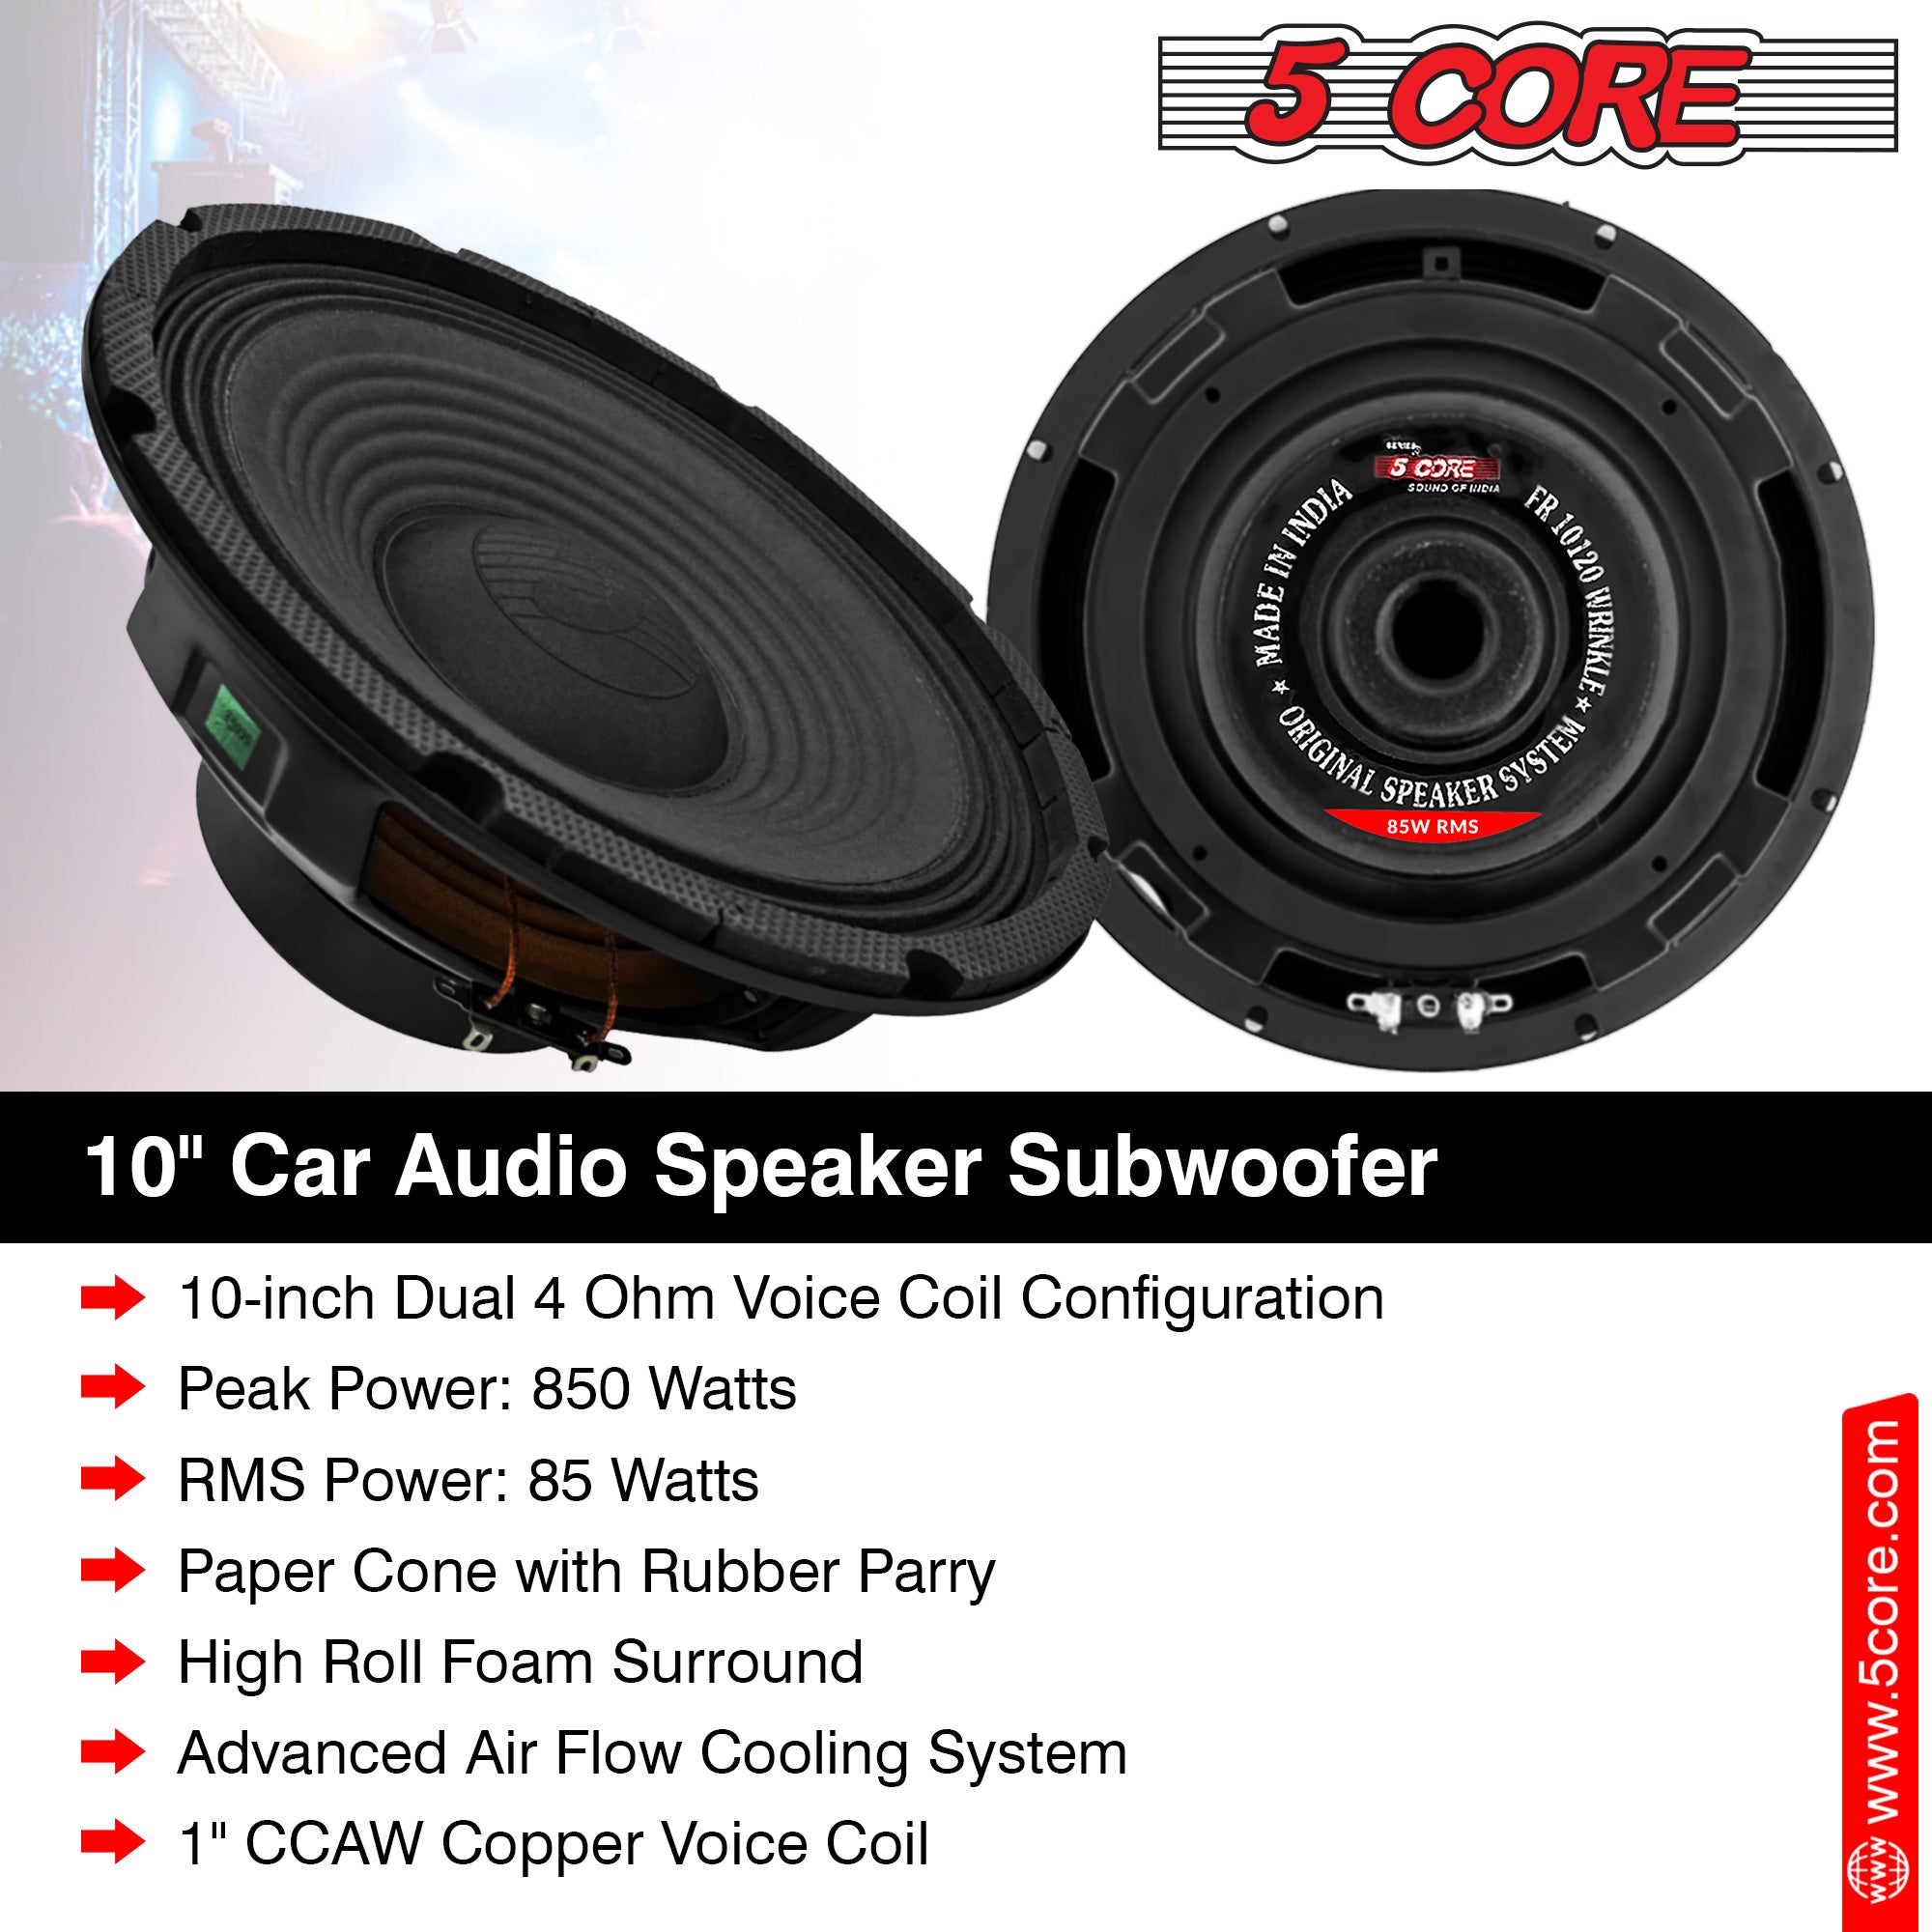 10" car audio speaker subwoofer high rolling foam surround